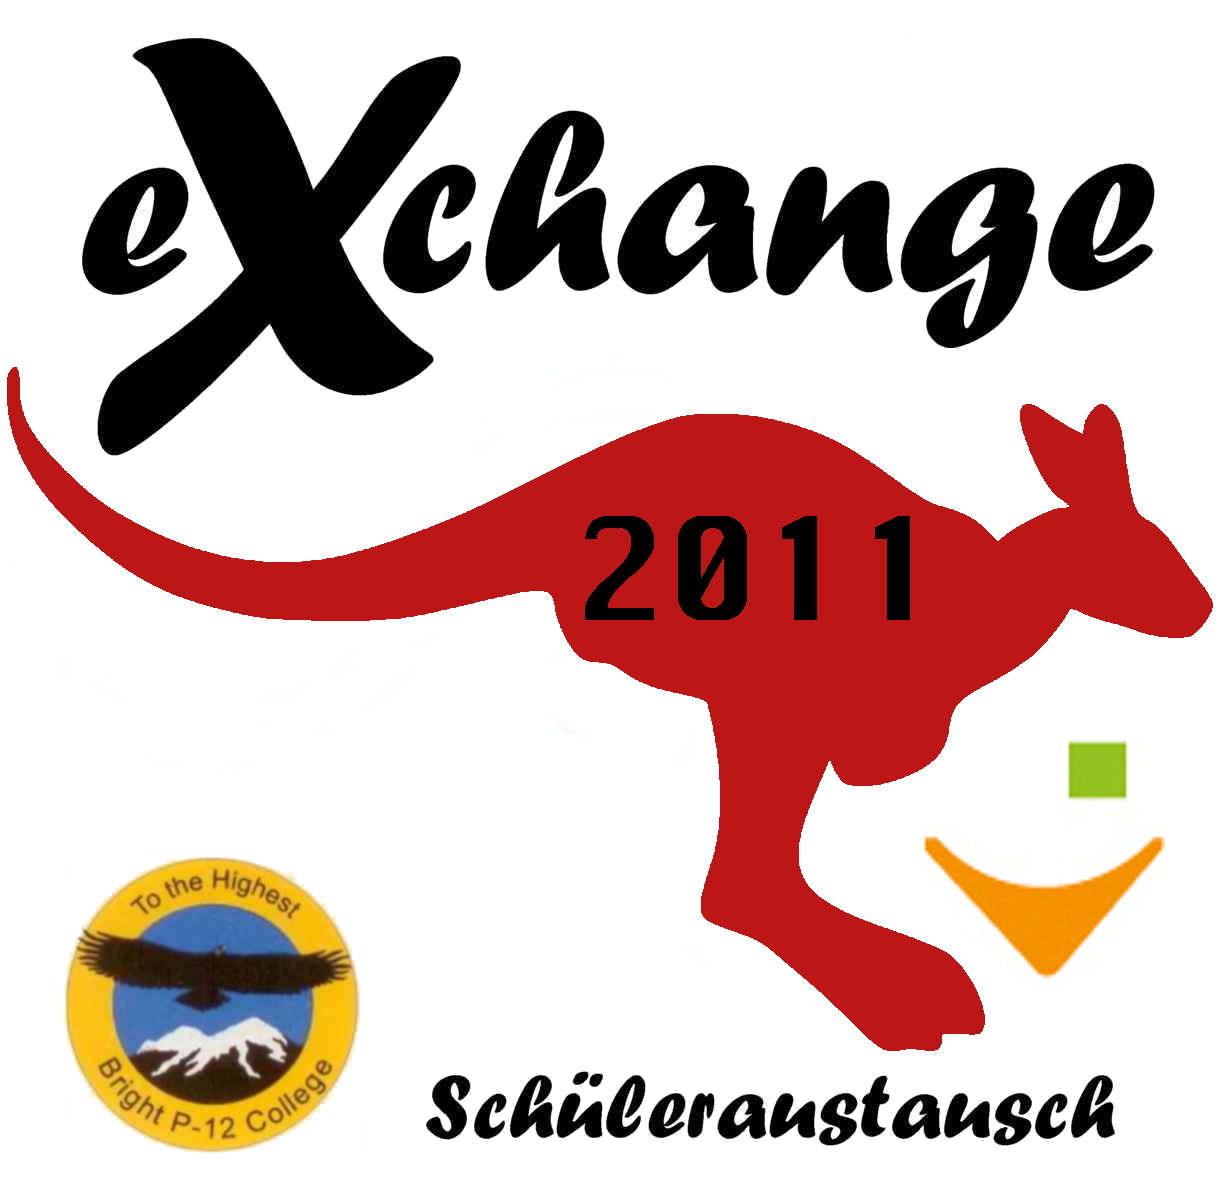 eXchange 2011